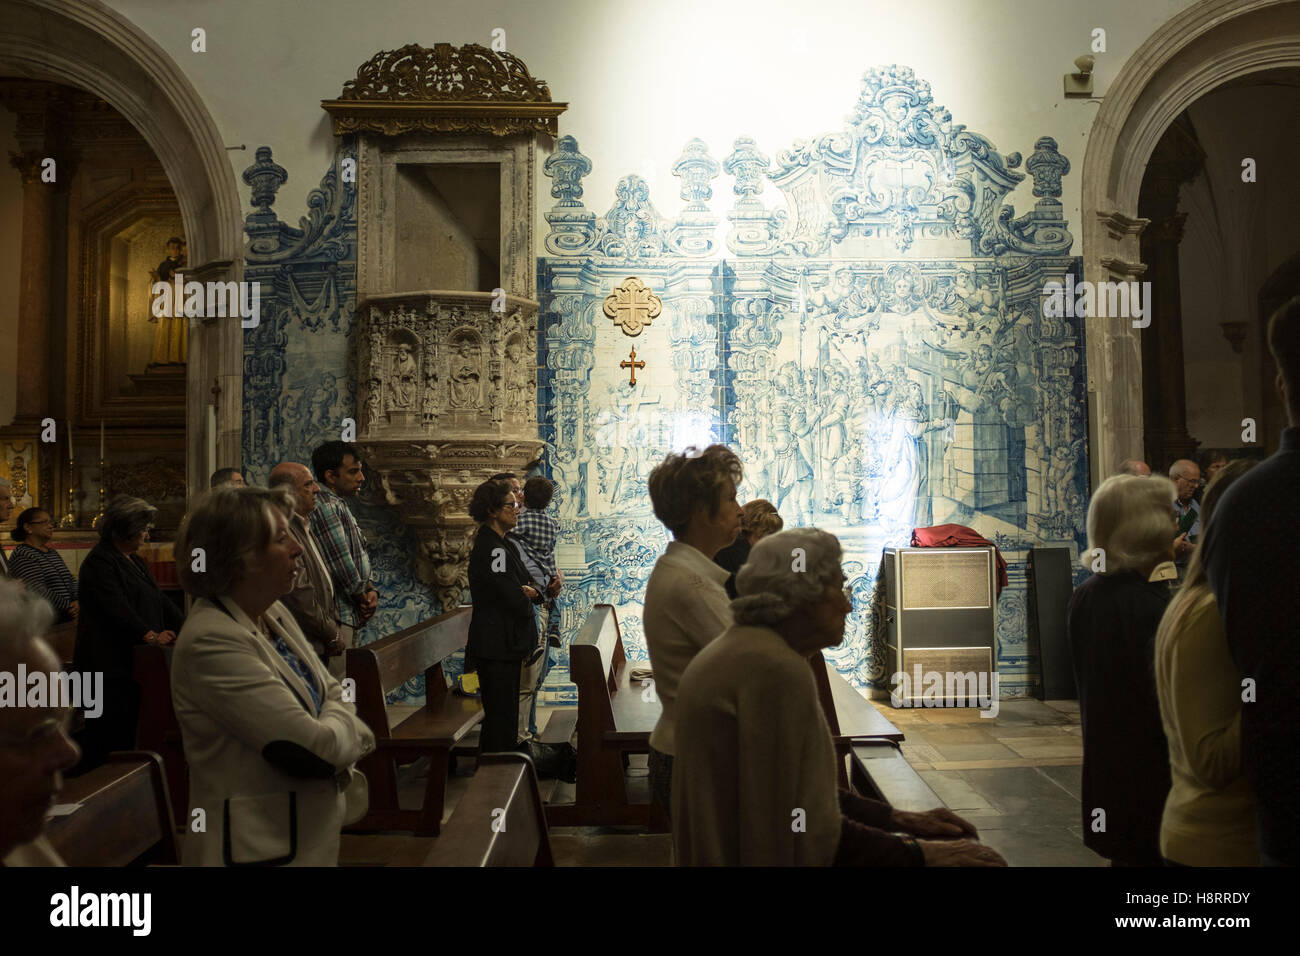 People praying in the igreja de Santa Cruz church in Coimbra, Portugal, during catholic mass Stock Photo